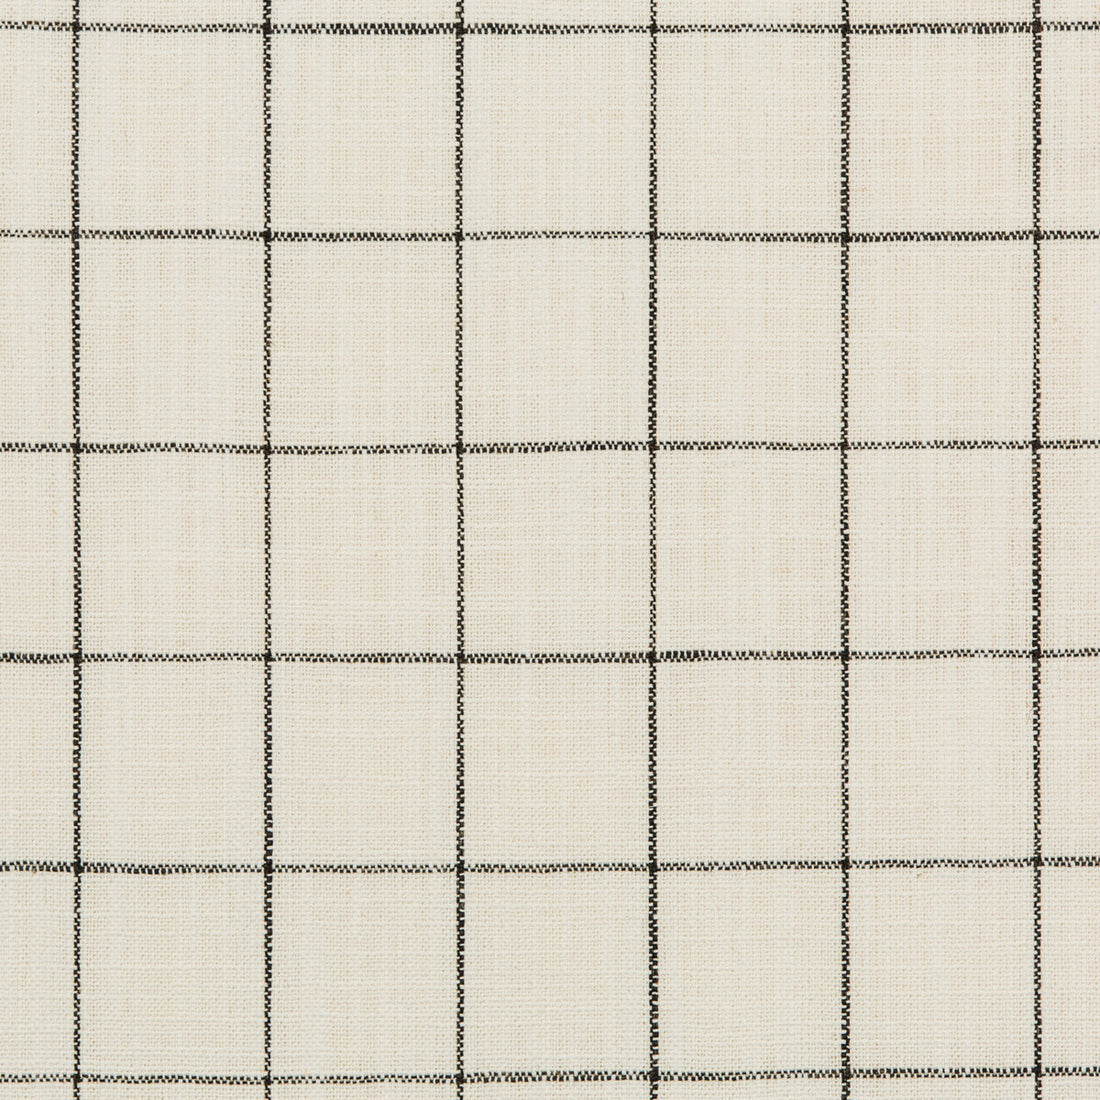 Kravet Smart fabric in 35930-18 color - pattern 35930.18.0 - by Kravet Smart in the Performance Kravetarmor collection